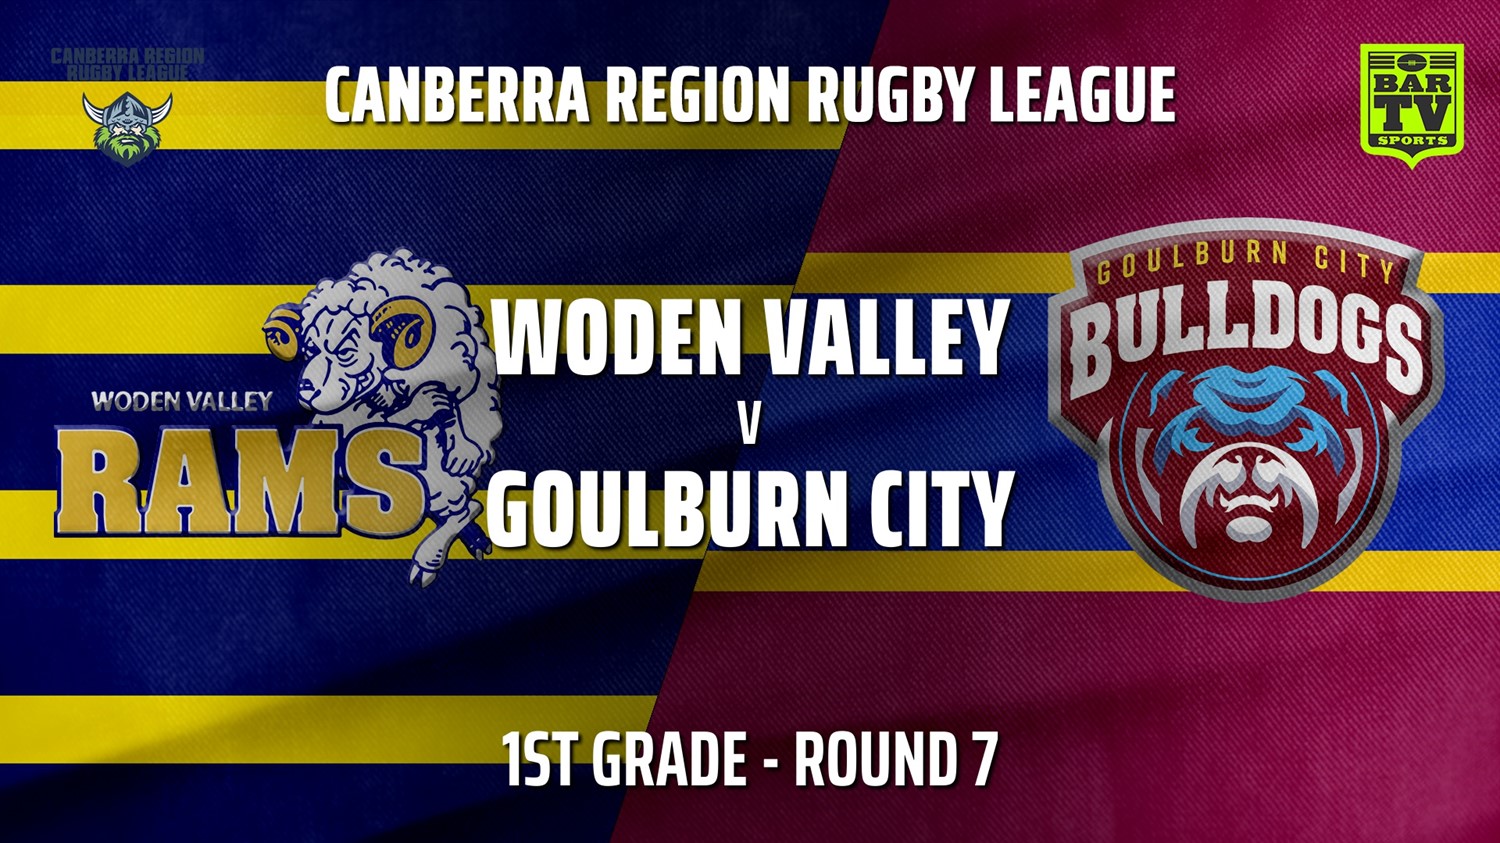 210529-CRRL Round 7 - 1st Grade - Woden Valley Rams v Goulburn City Bulldogs Minigame Slate Image